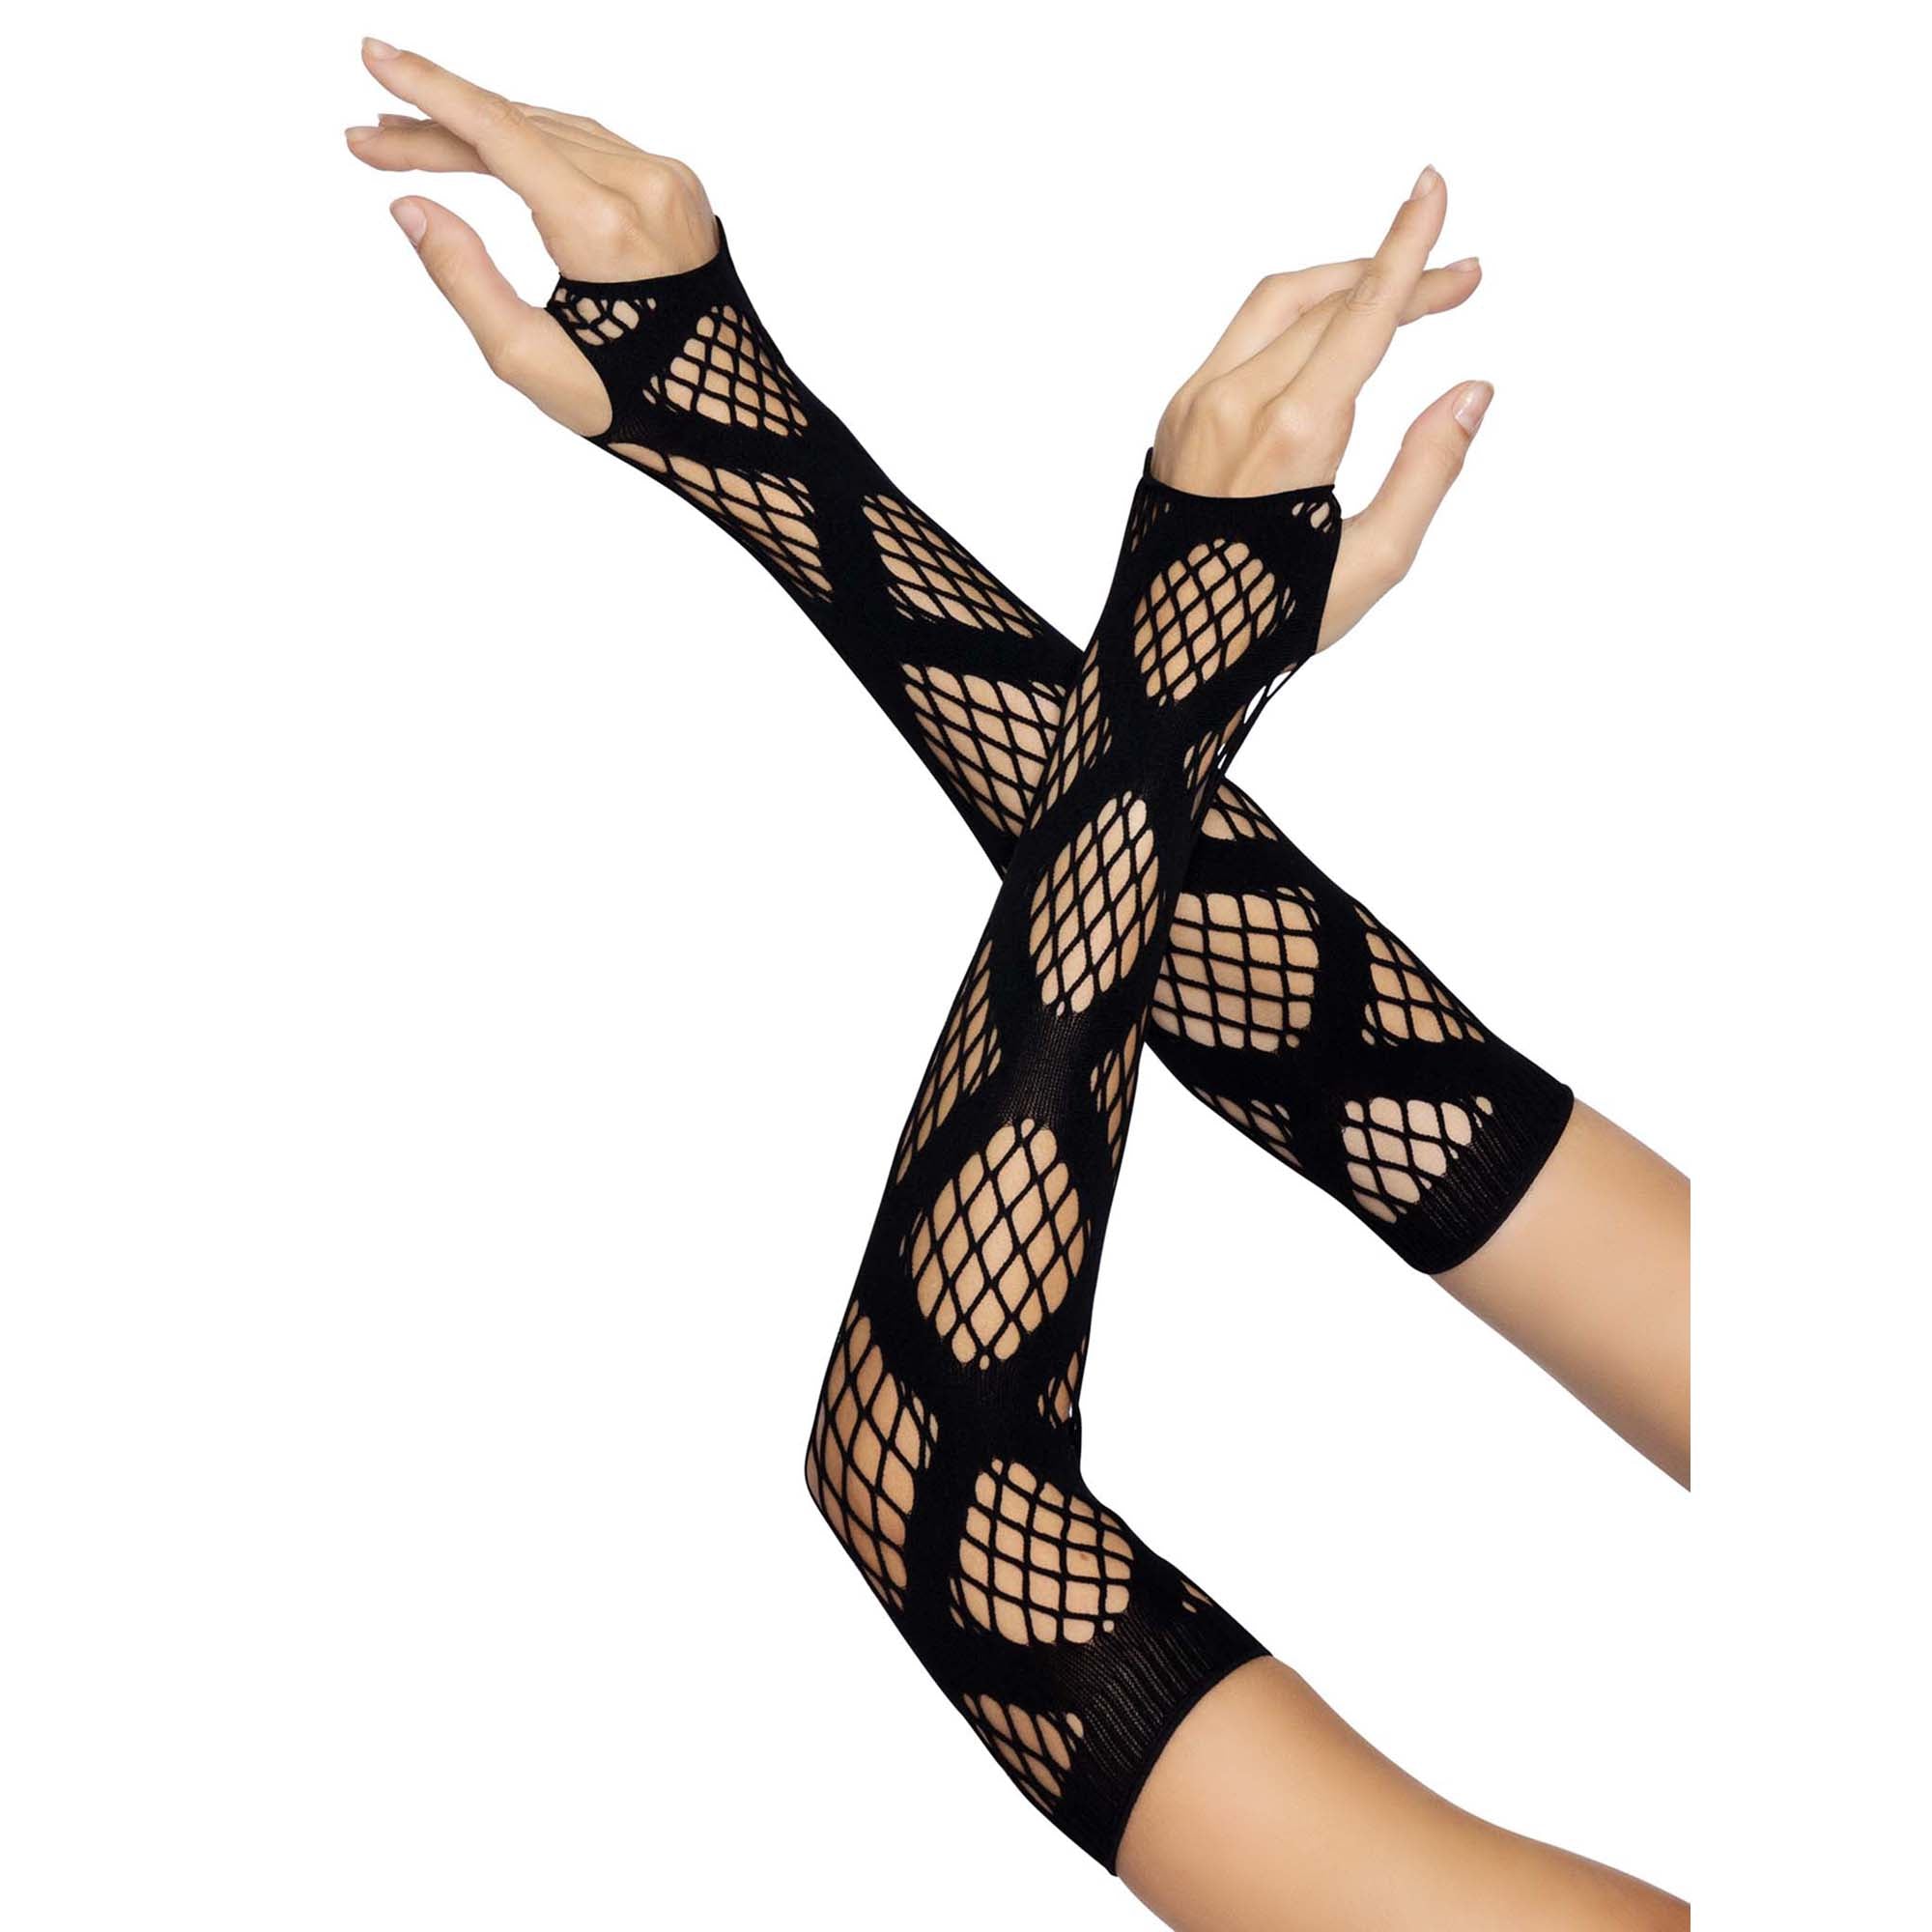 Black Long Fishnet Gloves for Adults, 1 Count